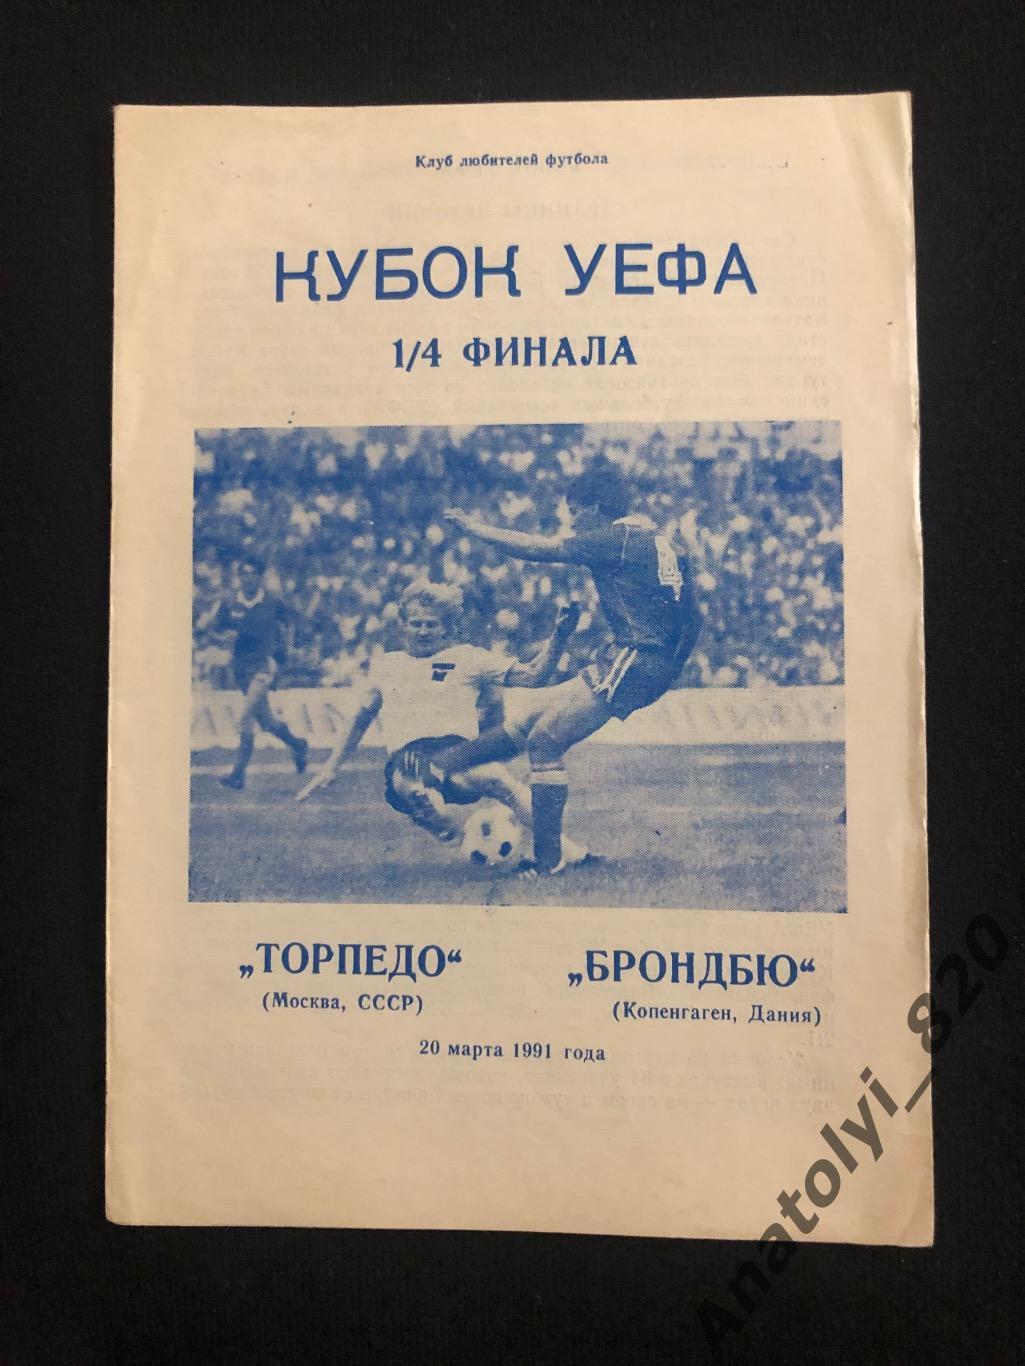 ФК Торпедо Москва - Брондбю Дания, 20.03.1991